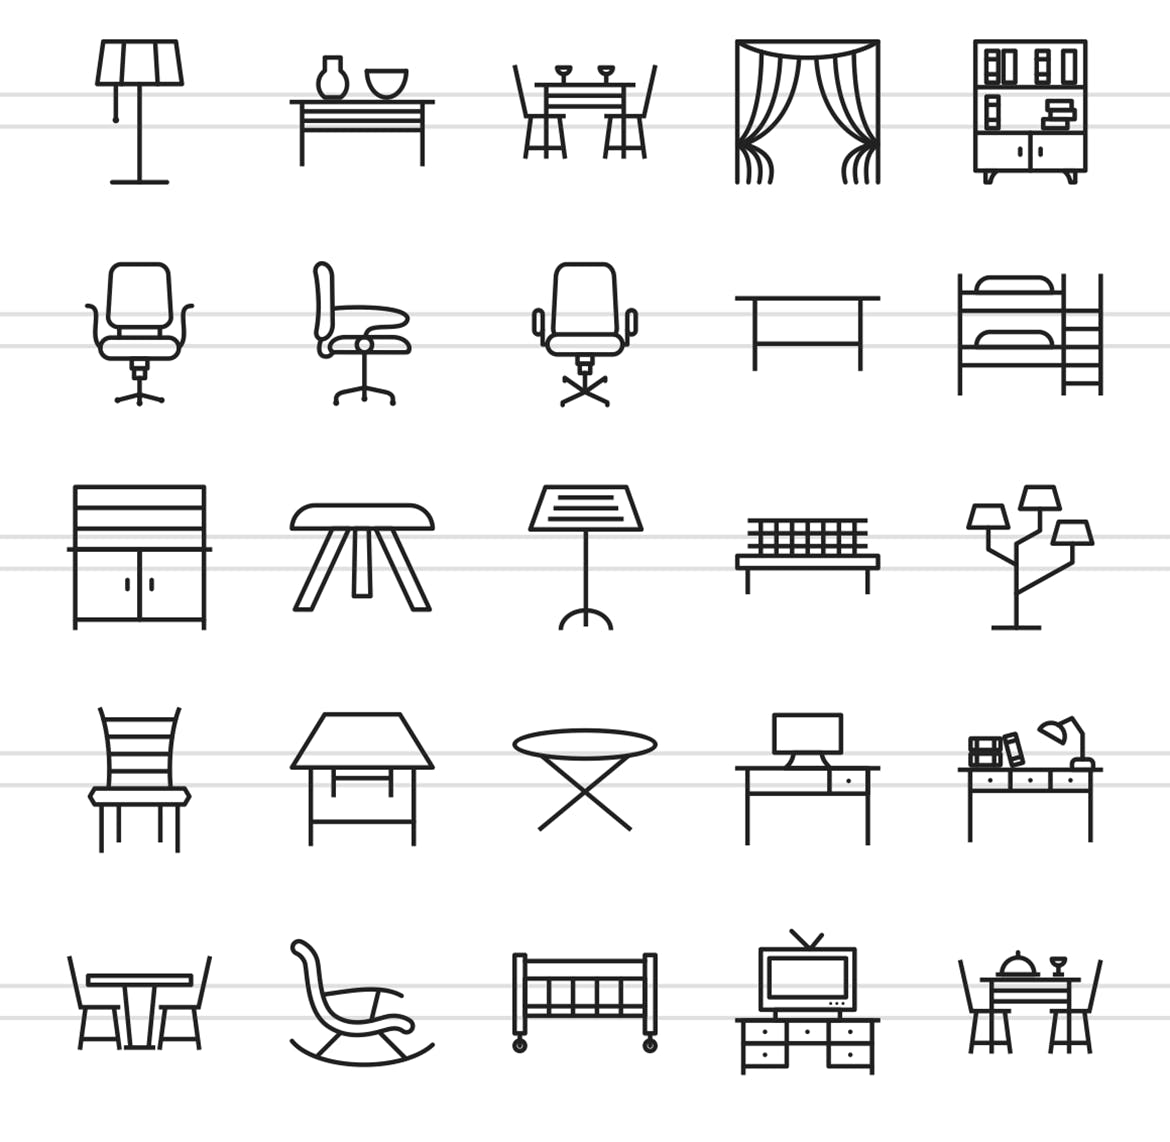 50枚家具系列线性第一素材精选图标 II 50 Furniture Line Icons Season II插图(2)